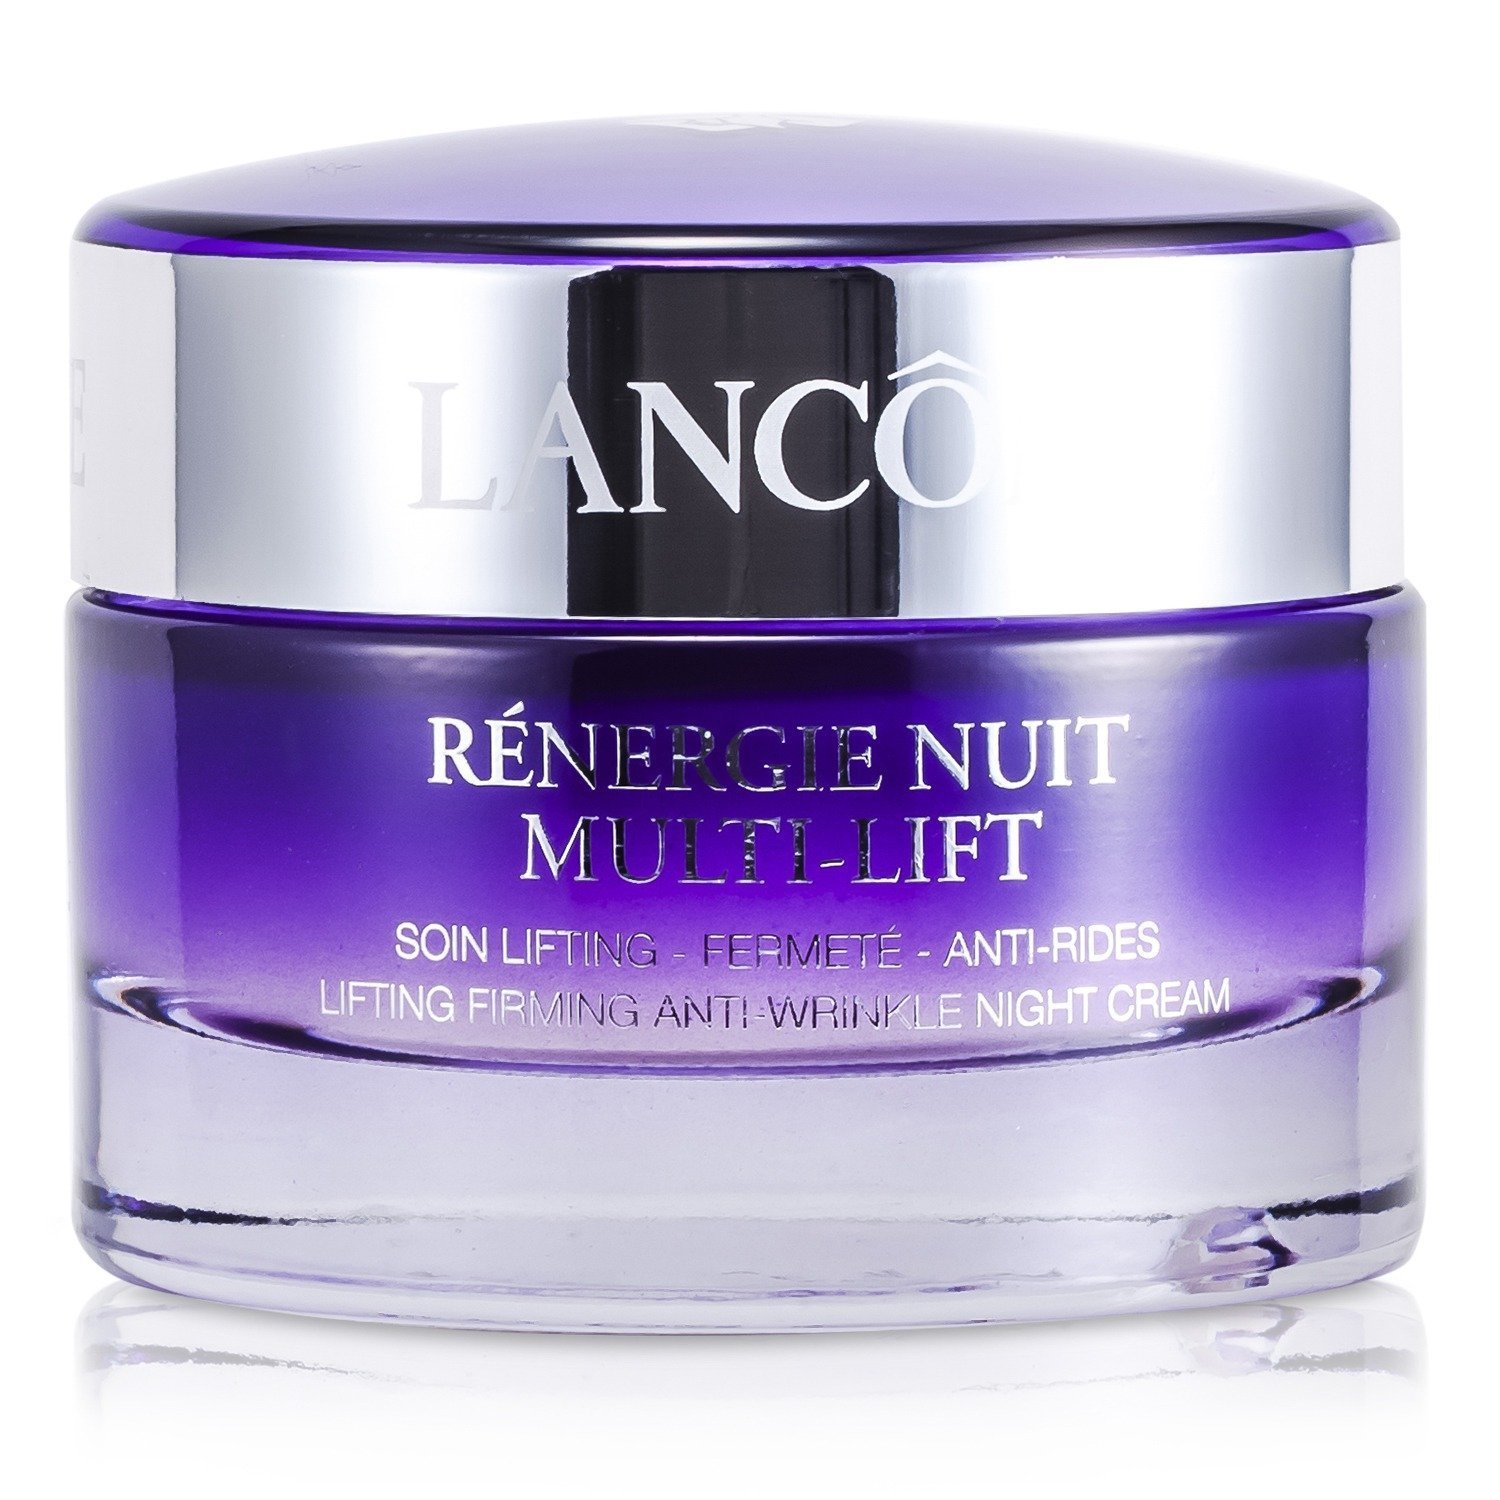 Lifting Renergie Firming Multi-Lift 50ml/1.7oz Lancôme Cream Night KOODING Anti-Wrinkle |